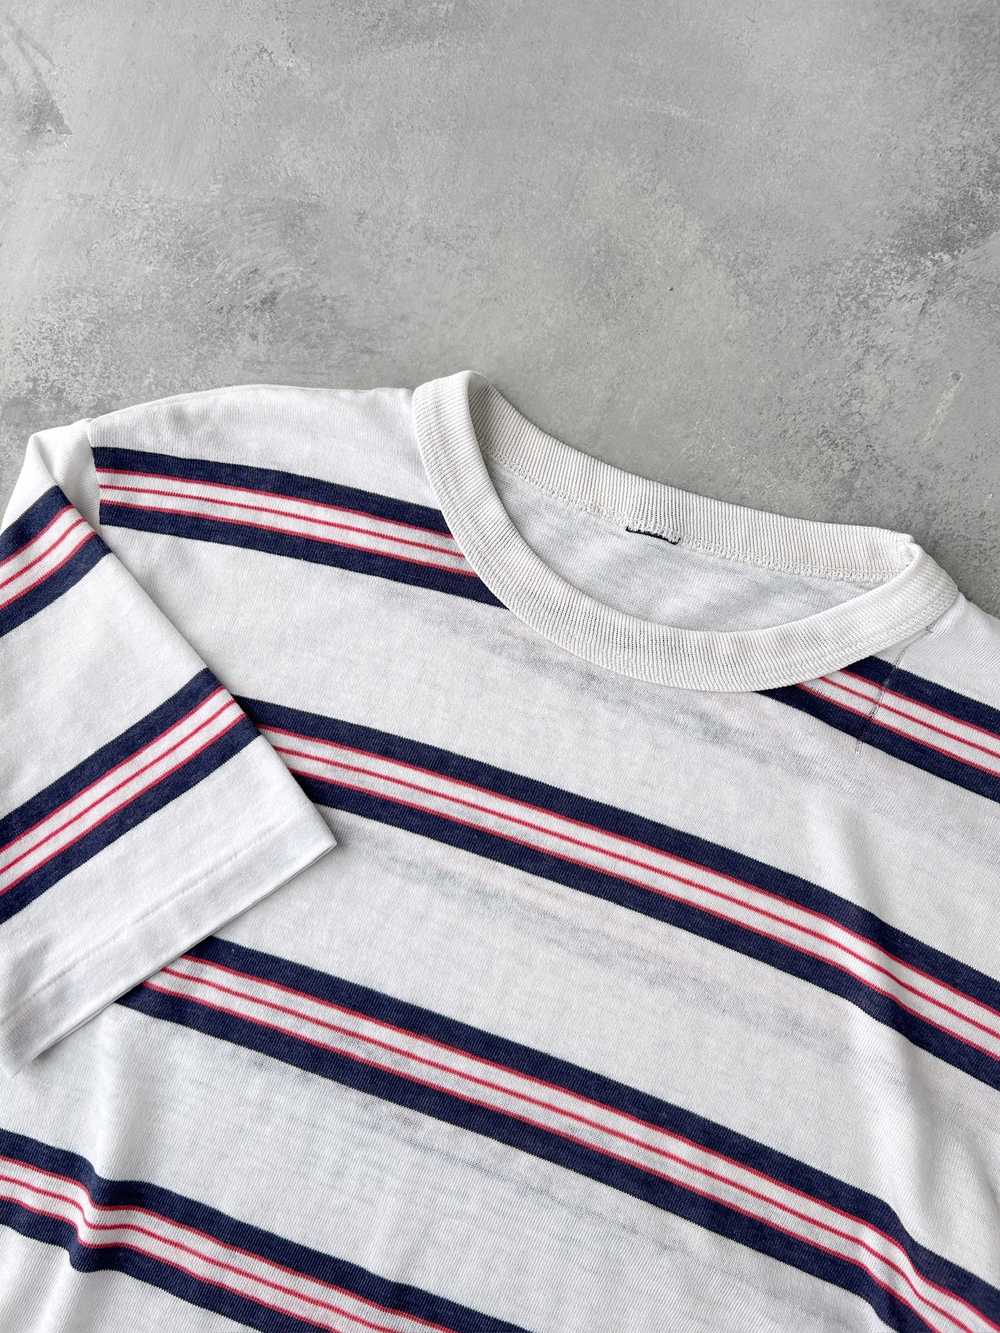 Striped T-Shirt 80's - Medium - image 2